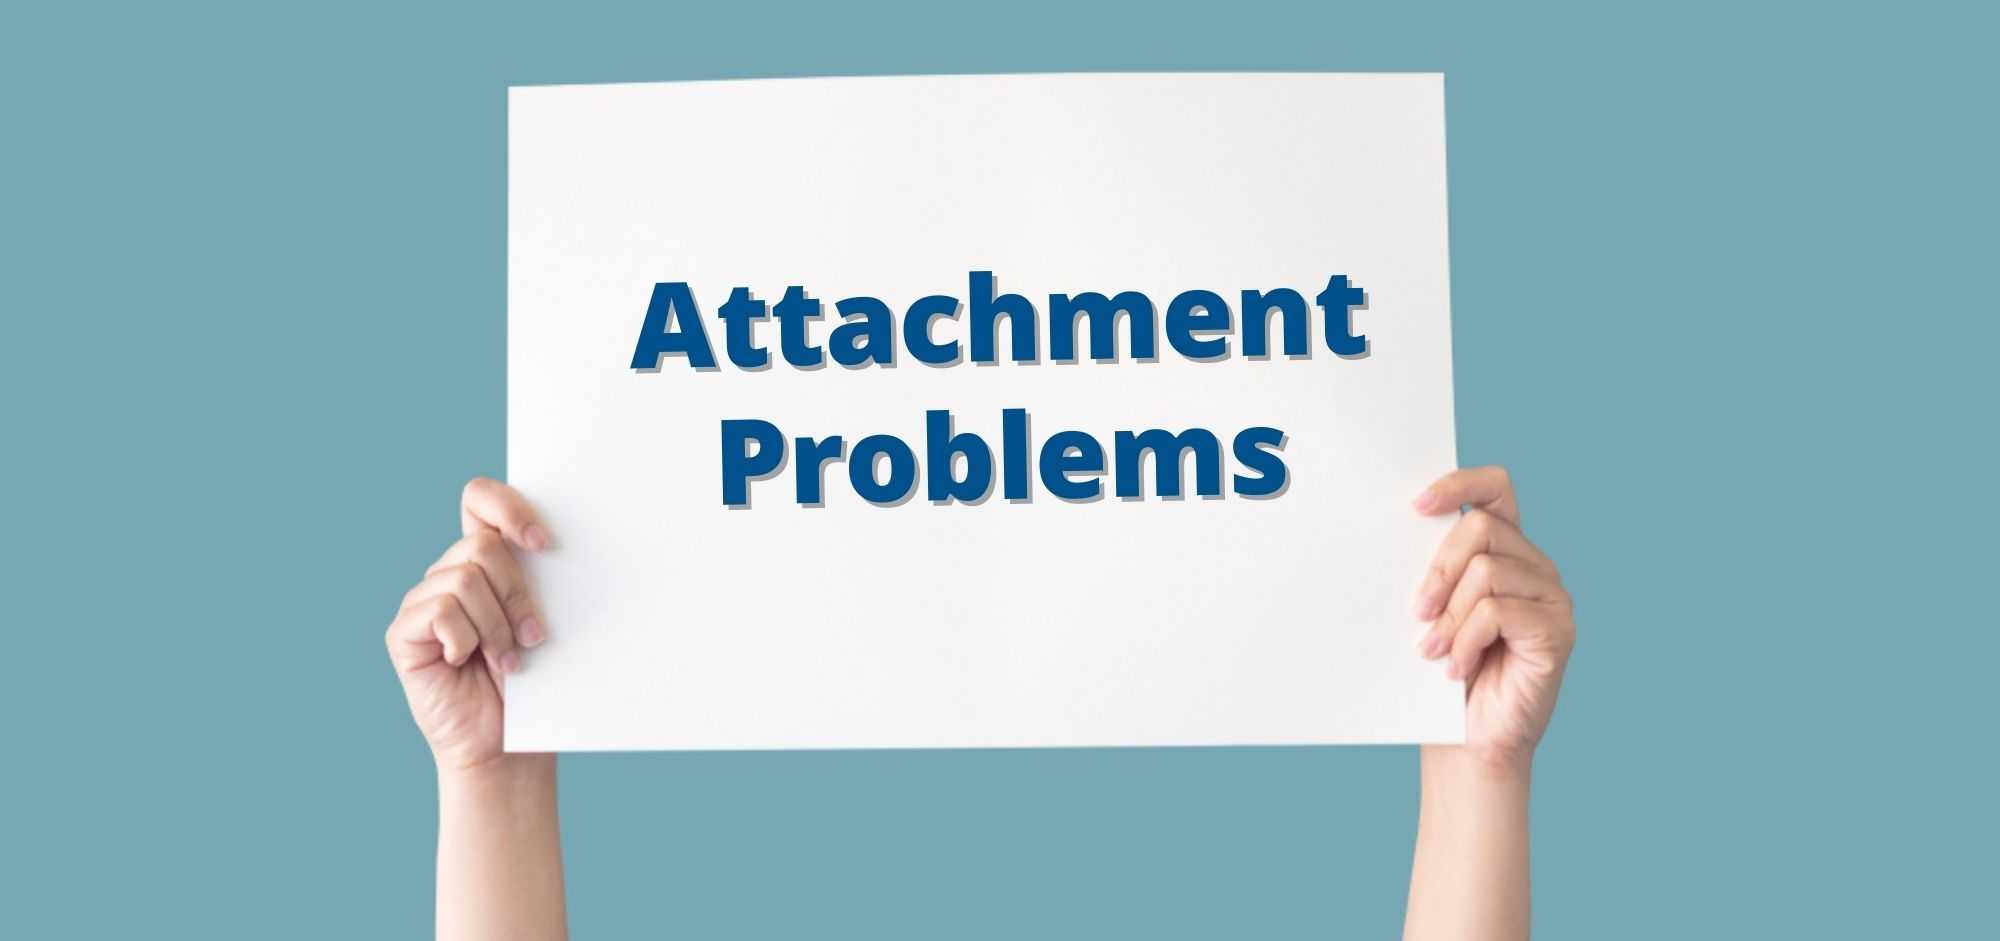 Attachment Problems